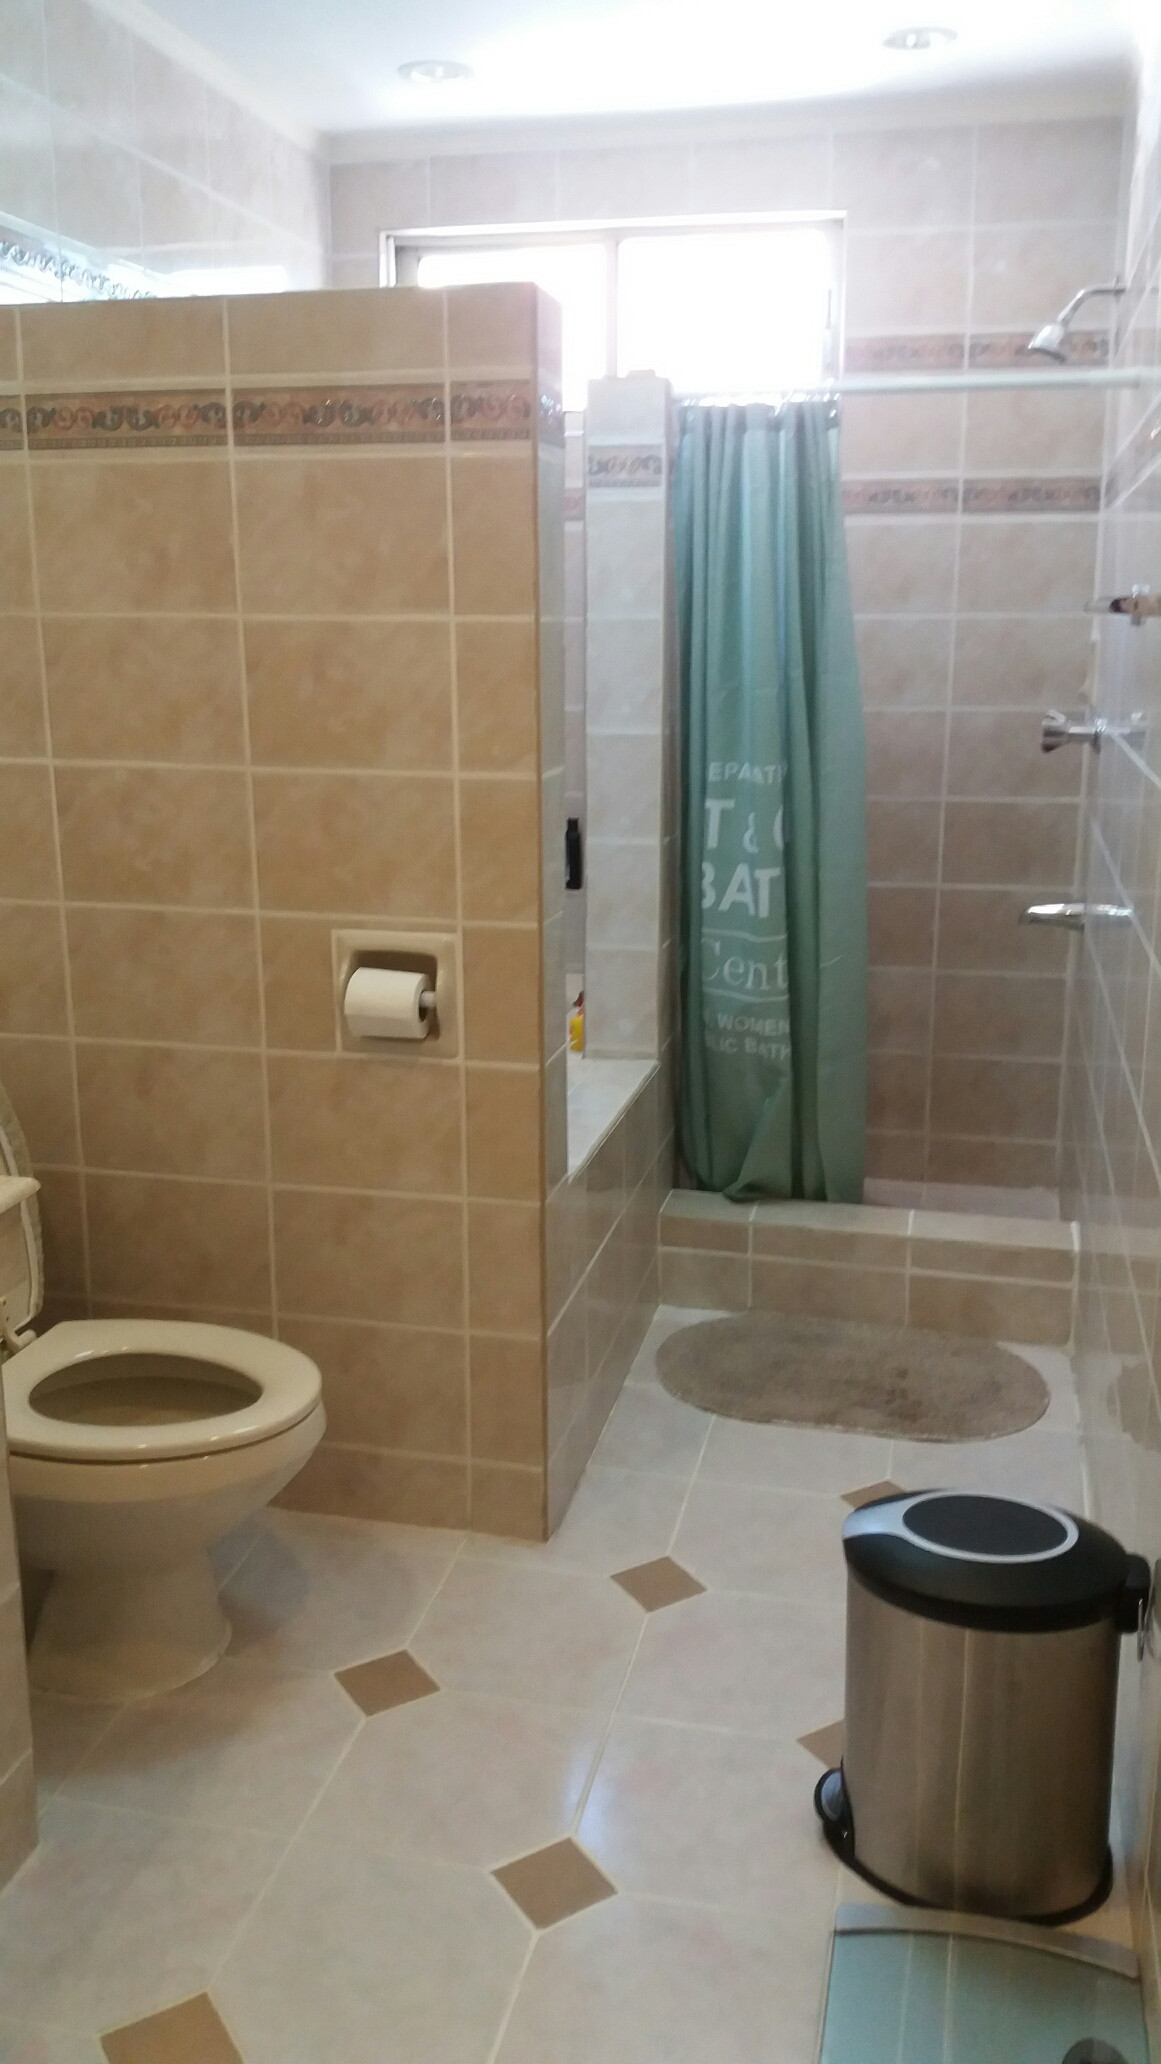 Regrouting Bathroom Tiles
 Regrouting bathroom tiles – DIY style – Rexy Hernandez Go